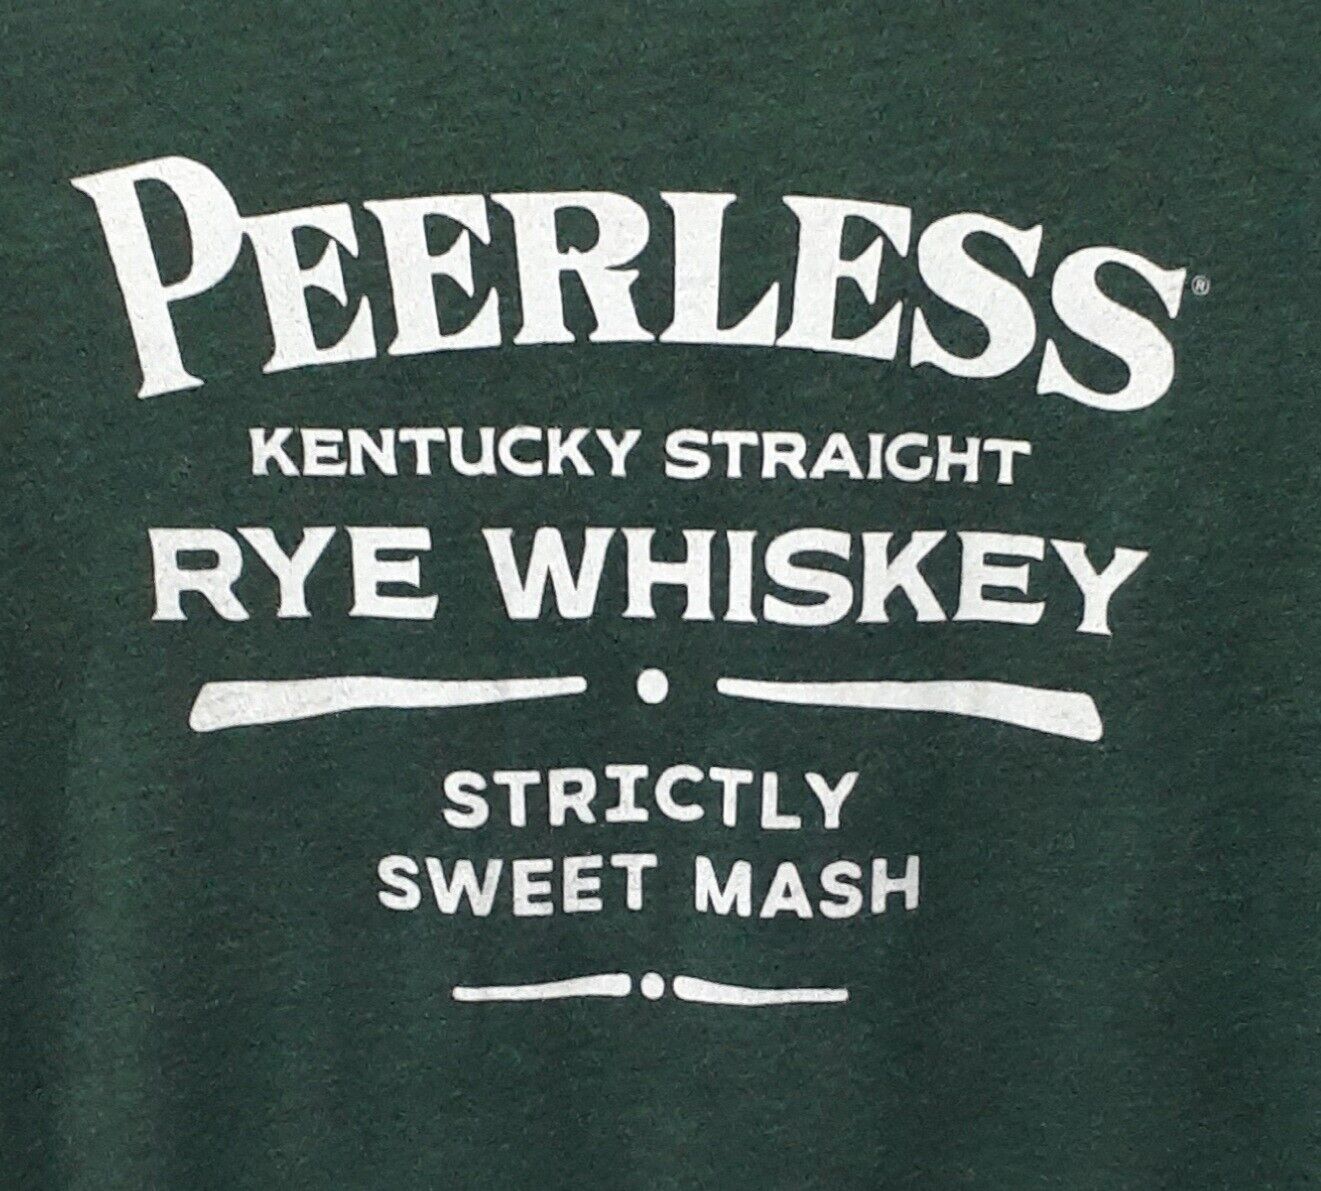 Peerless Distillery Kentucky Straight Rye Whiskey Green T-Shirt Size 2XL 23x30